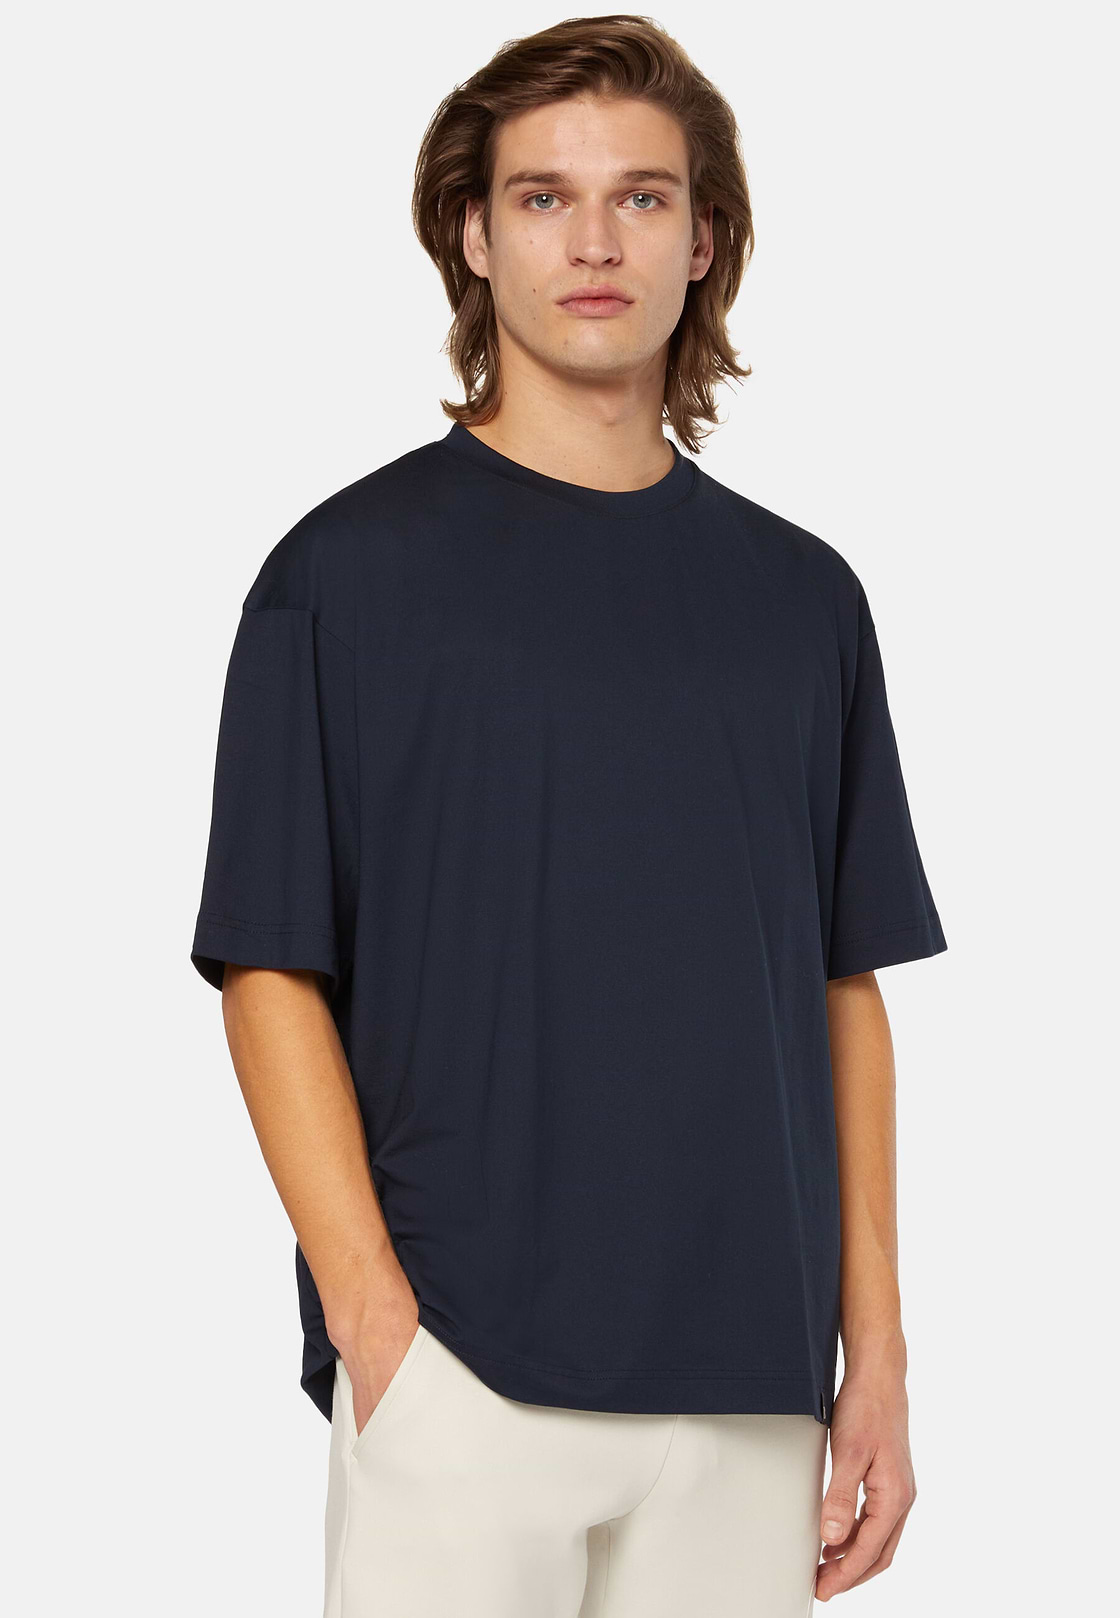 High-Performance Jersey T-Shirt, Navy blue, hi-res